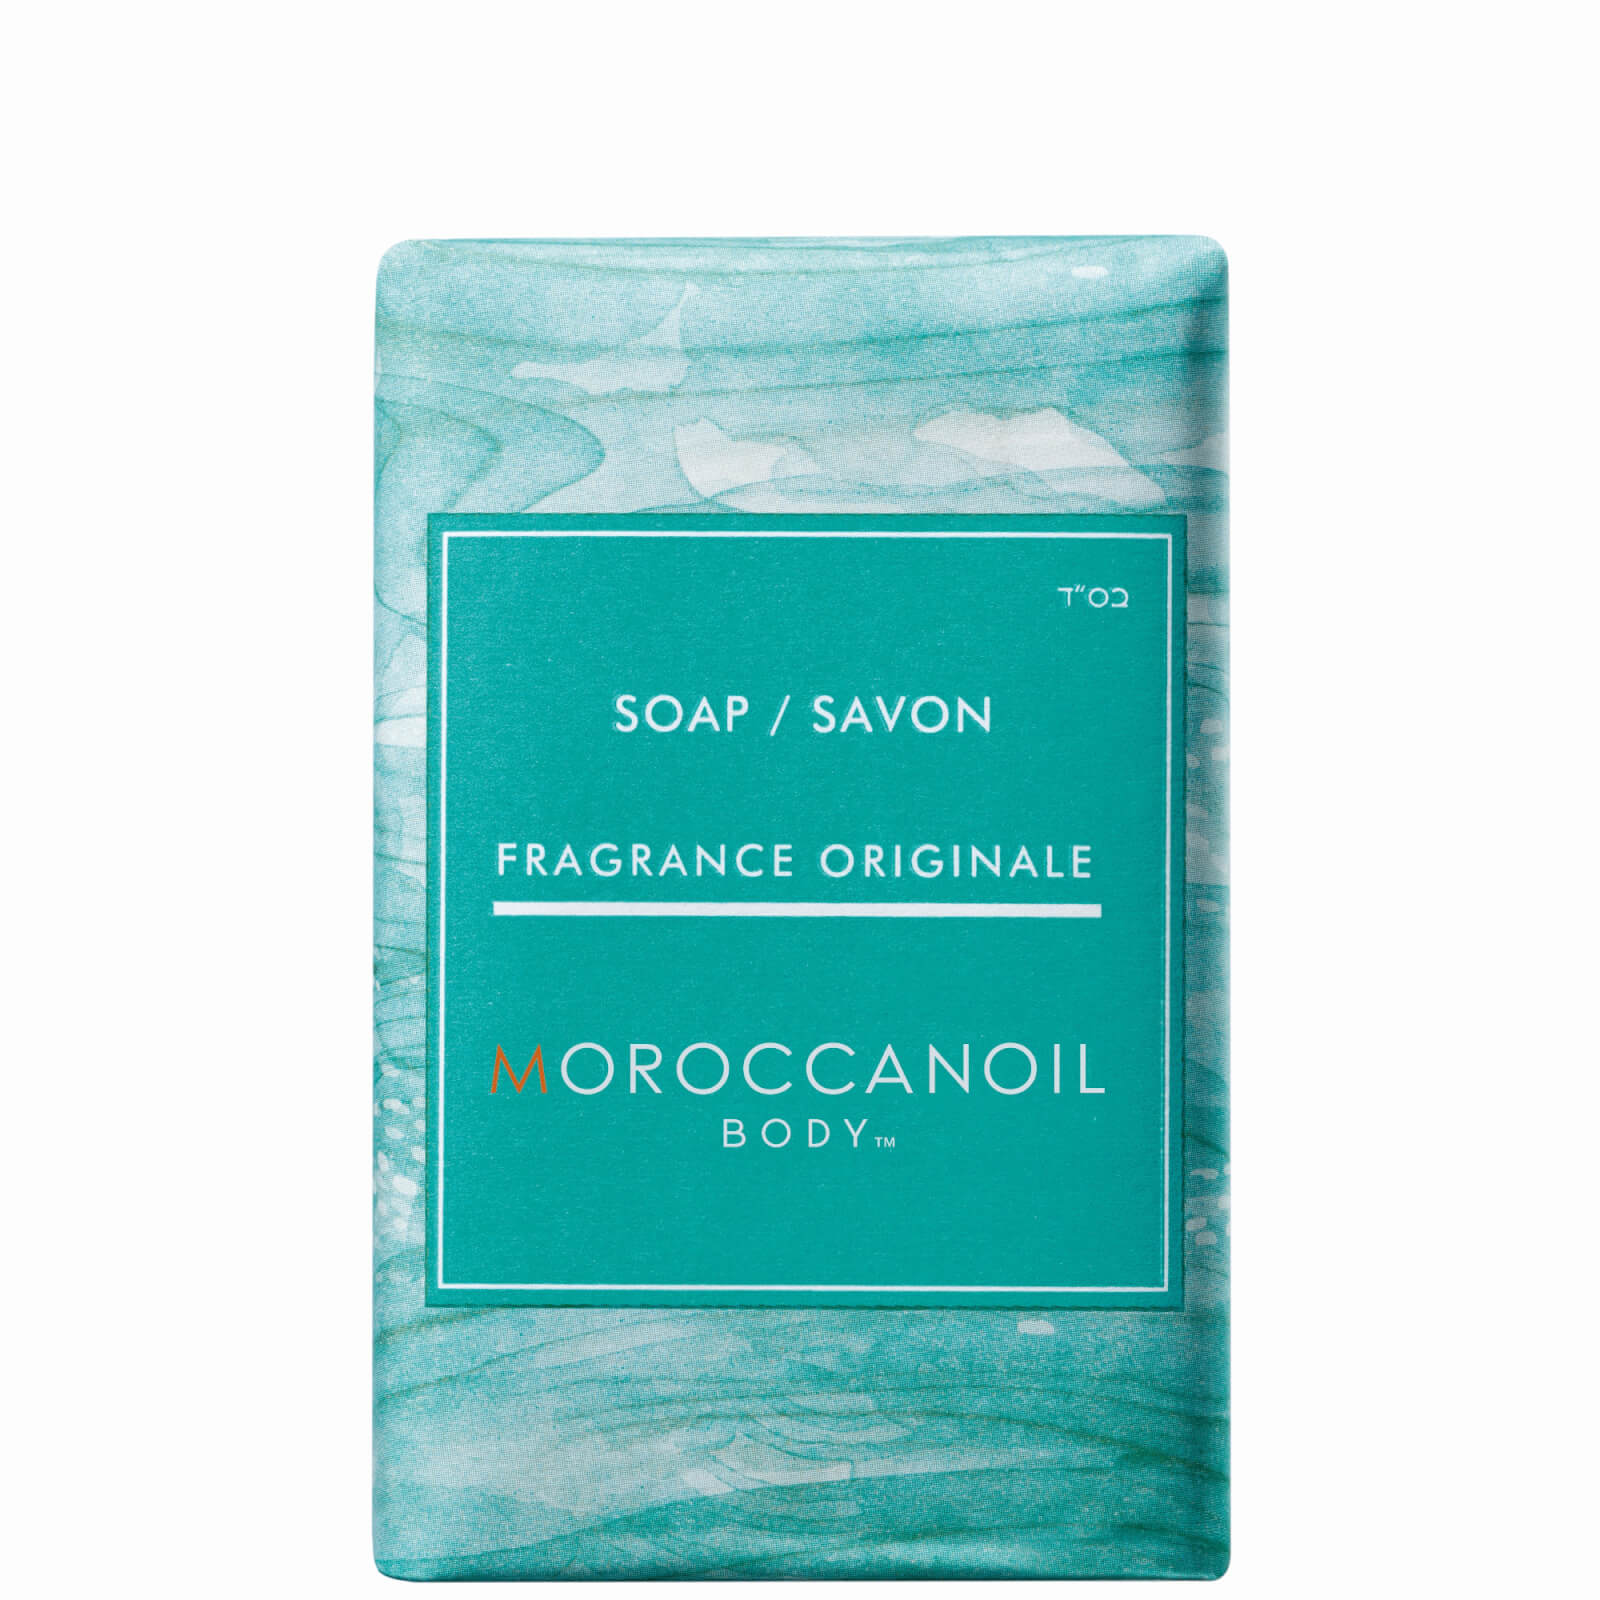 Moroccanoil Soap Bar - Fragrance Originale 200g